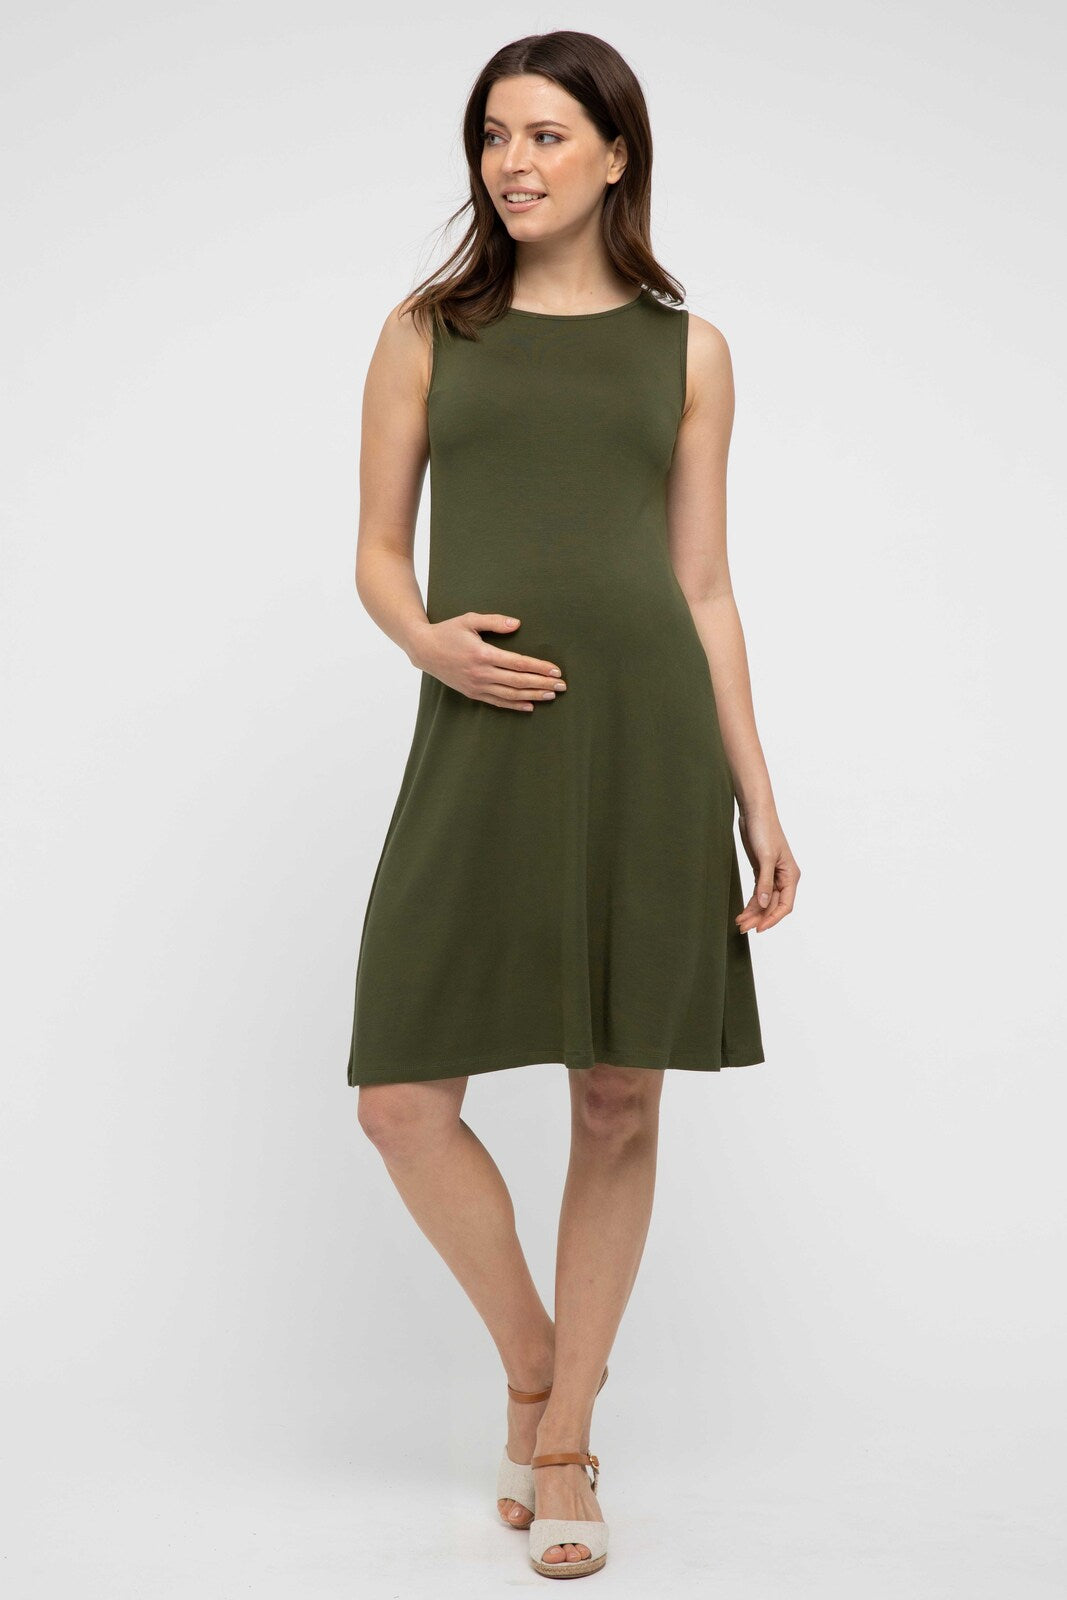 Organic Bamboo Adele Maternity Dress Dress from Bamboo Body maternity online store brisbane sydney perth australia